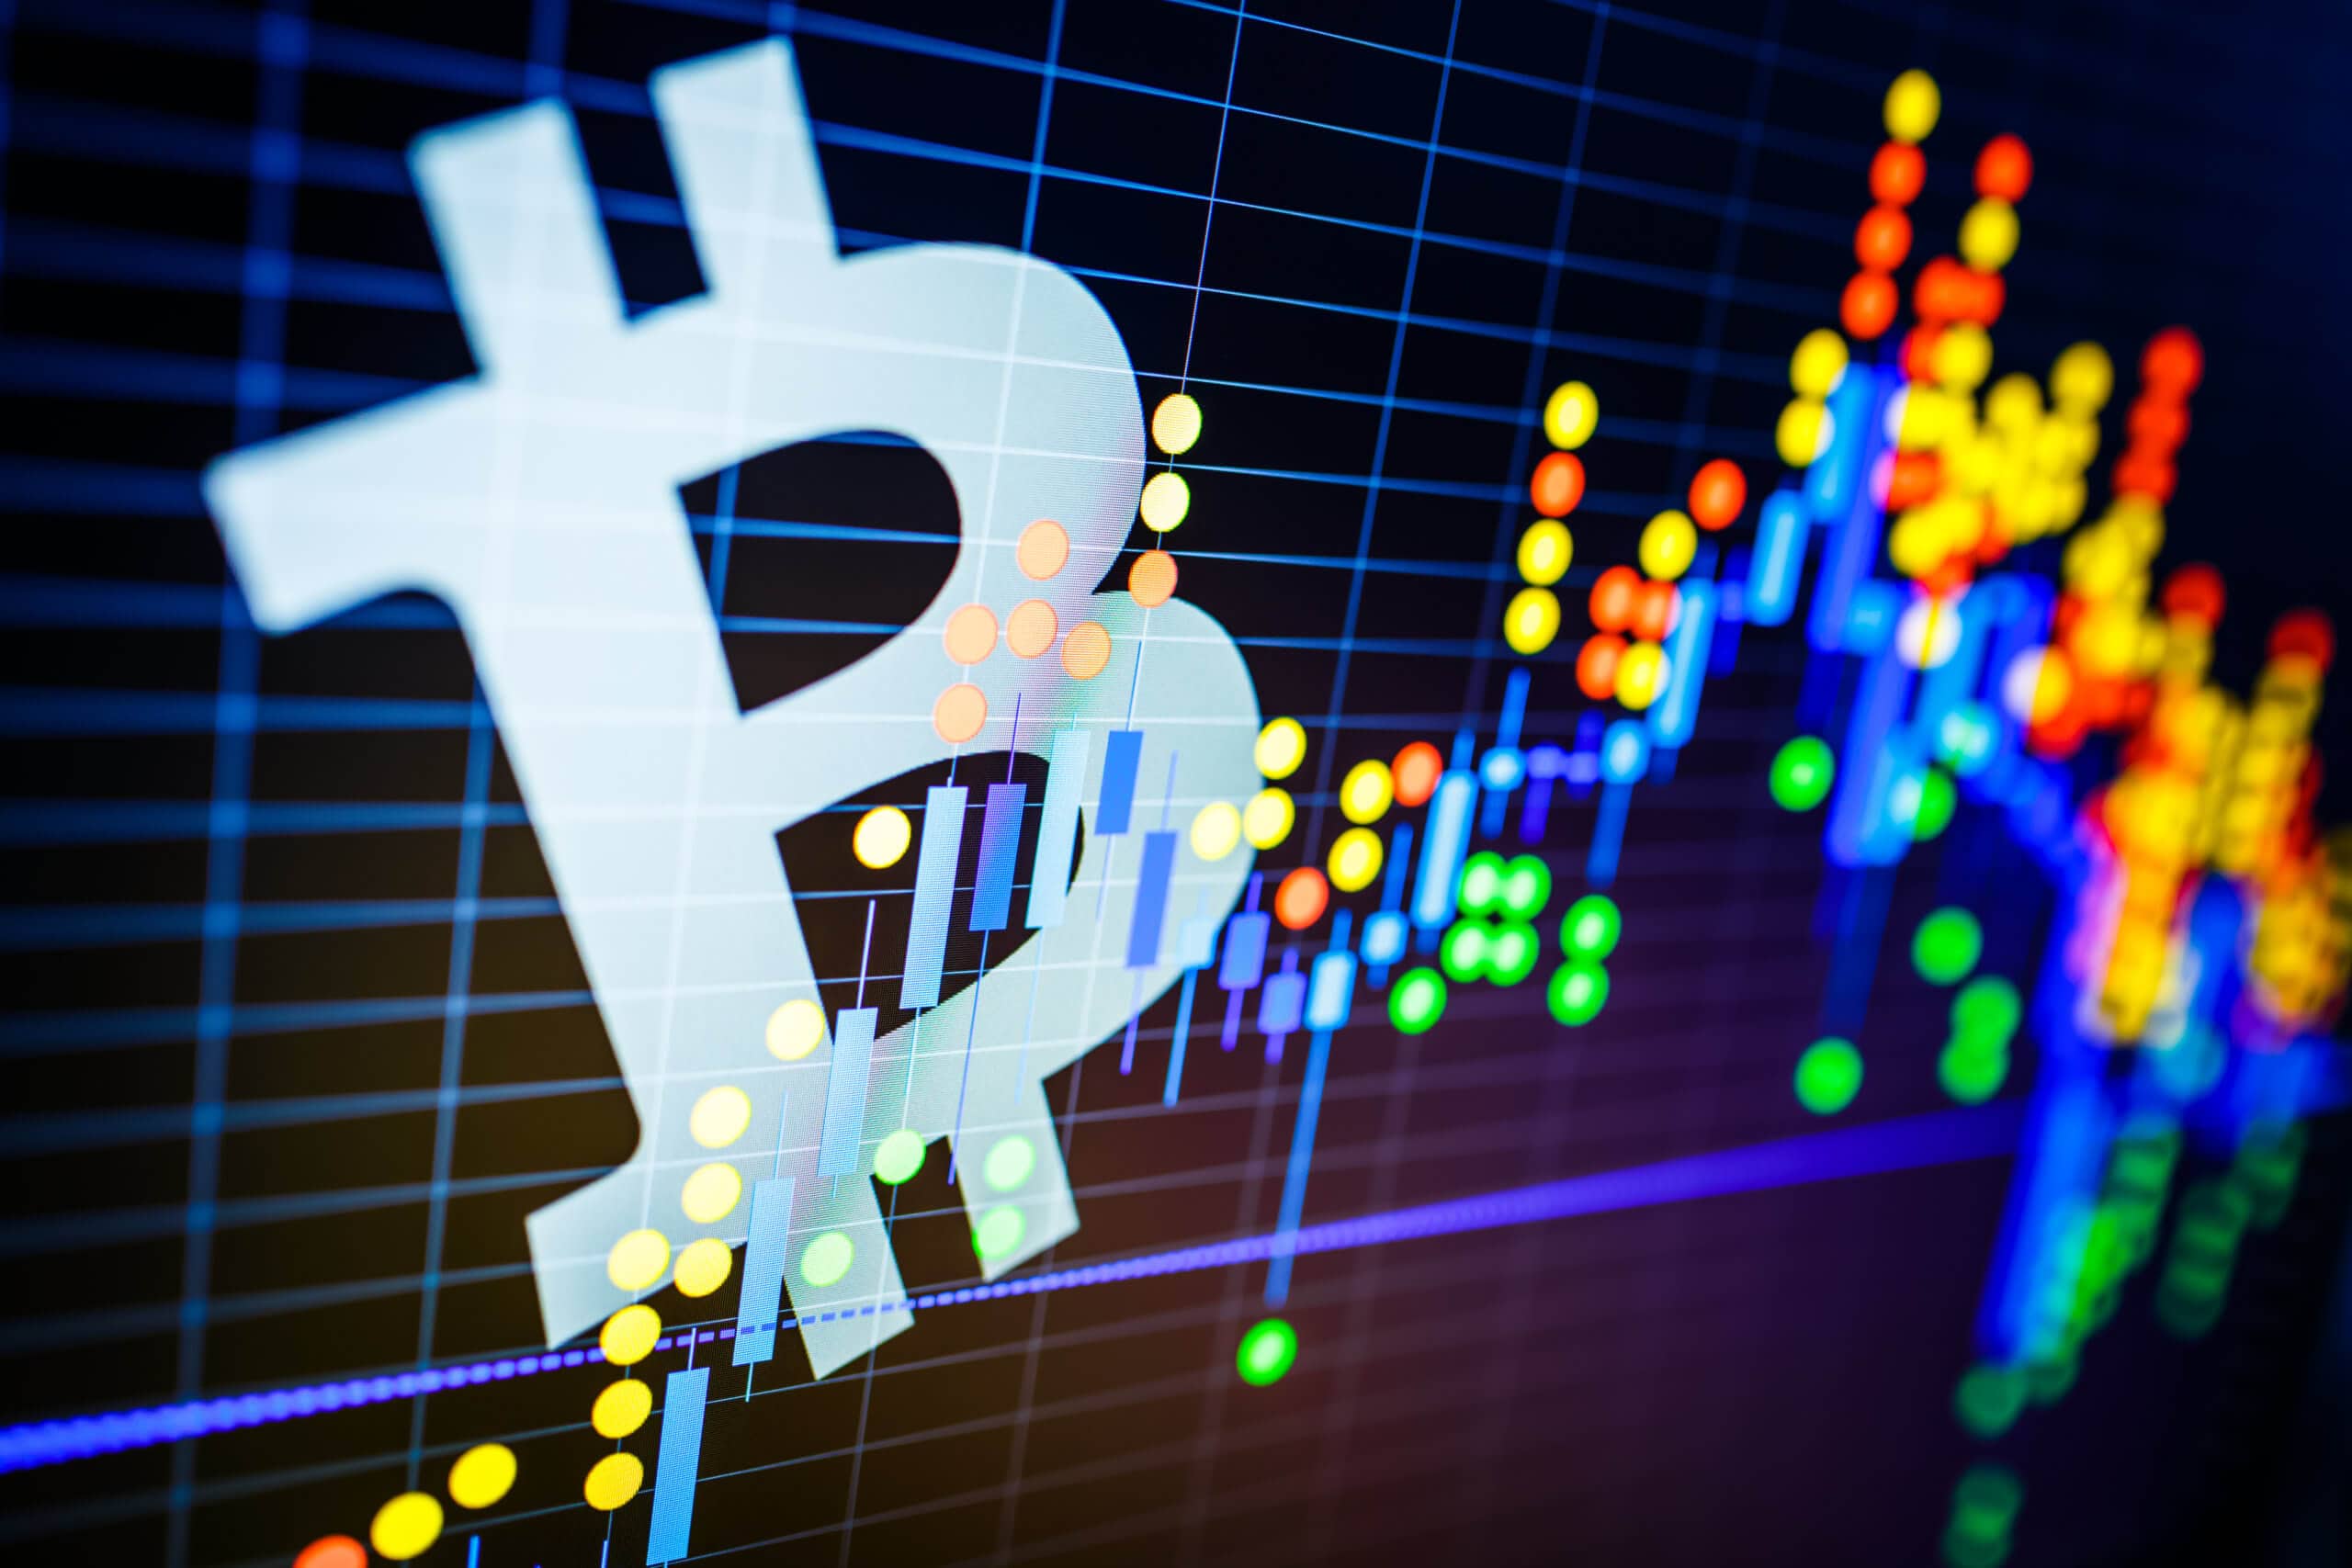 Bitcoin analysis - Has the BTC price found its bottom?